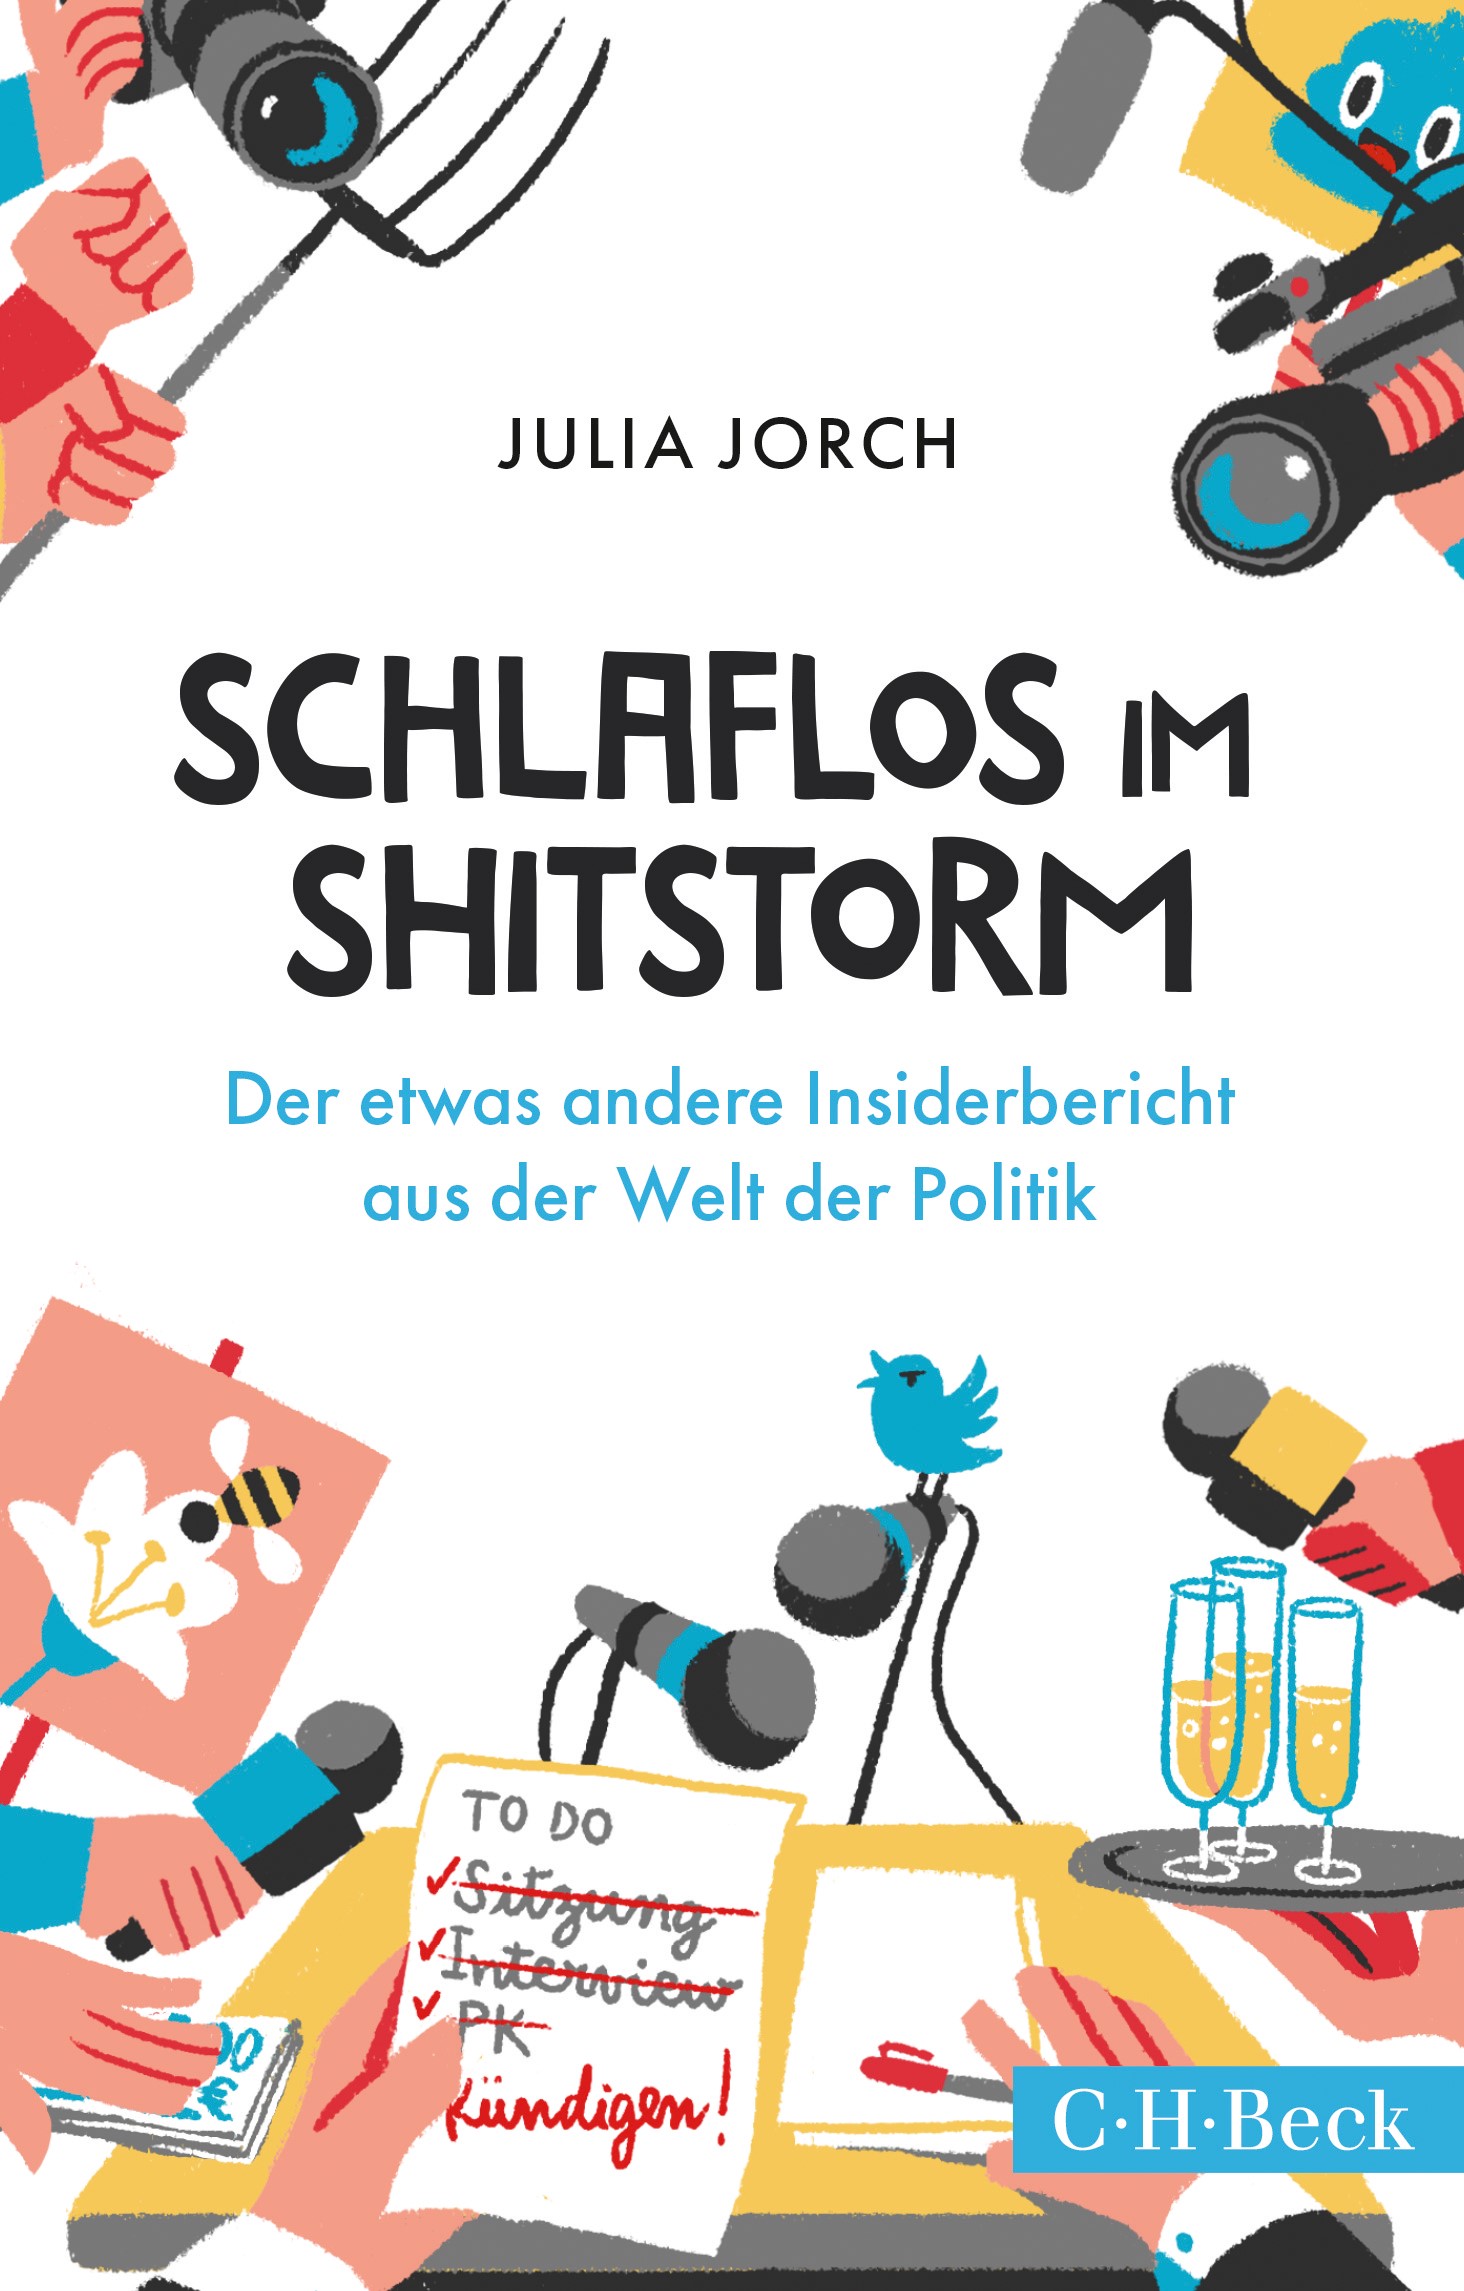 Cover: Jorch, Julia, Schlaflos im Shitstorm